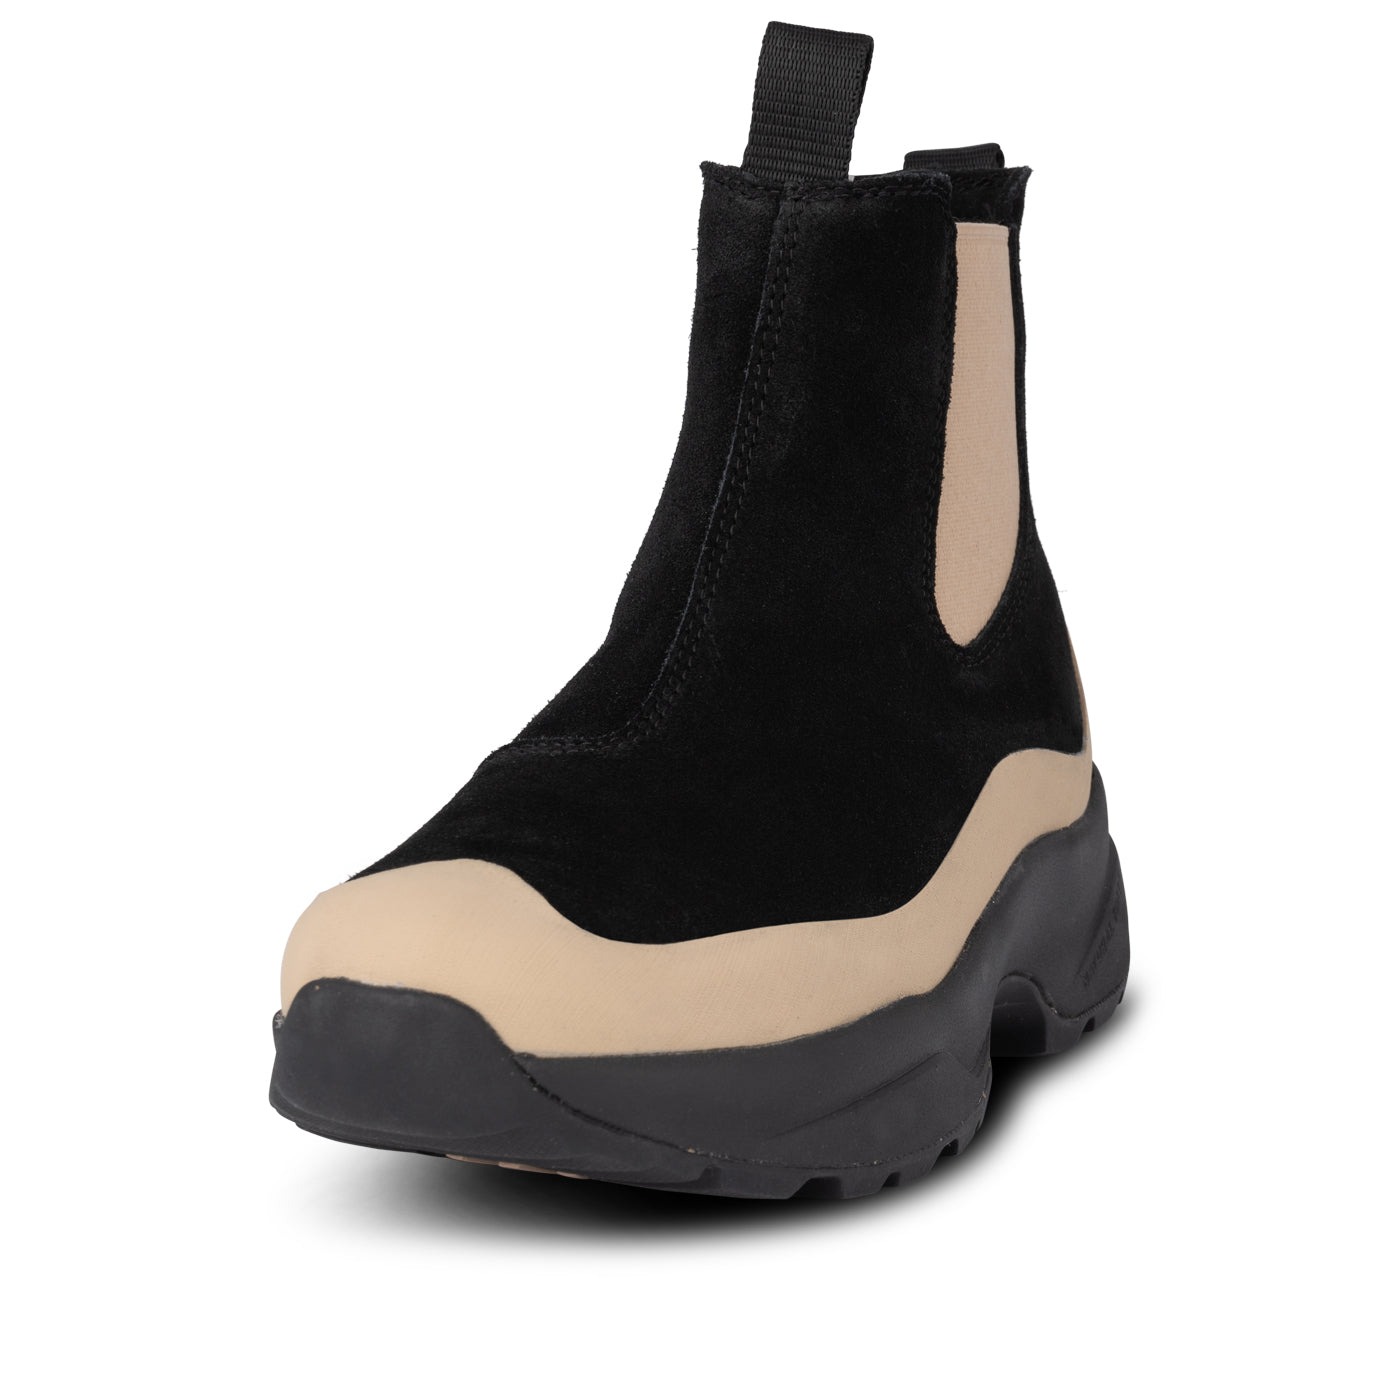 WODEN Solveig Suede Waterproof Boots 864 Black/Coffee Cream